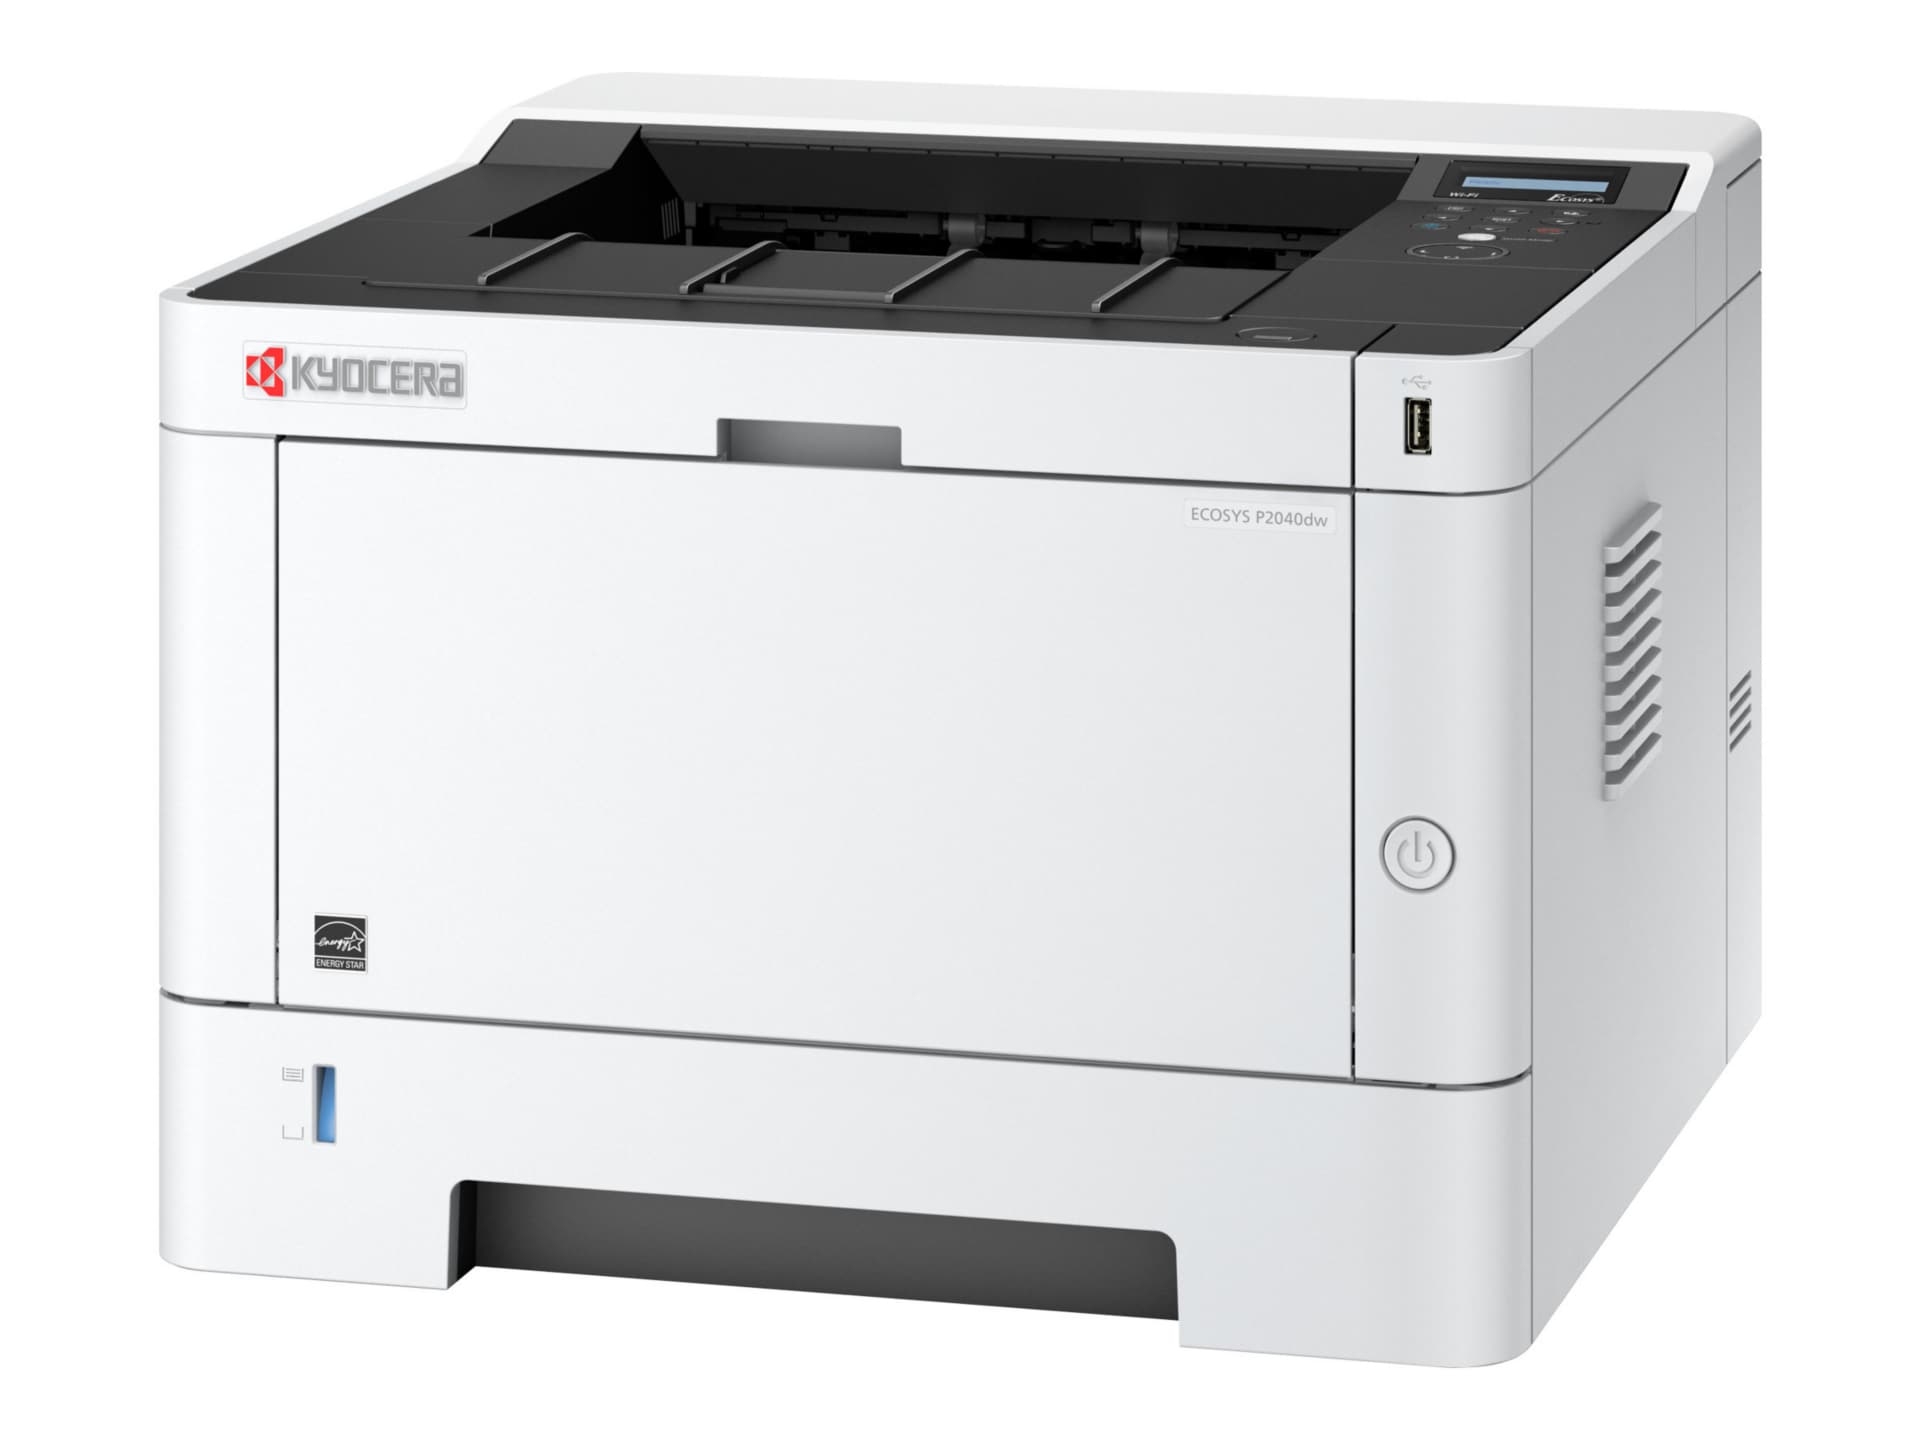 Kyocera ECOSYS P2040dw 42ppm 1200dpi Duplex Monochrome Laser Printer